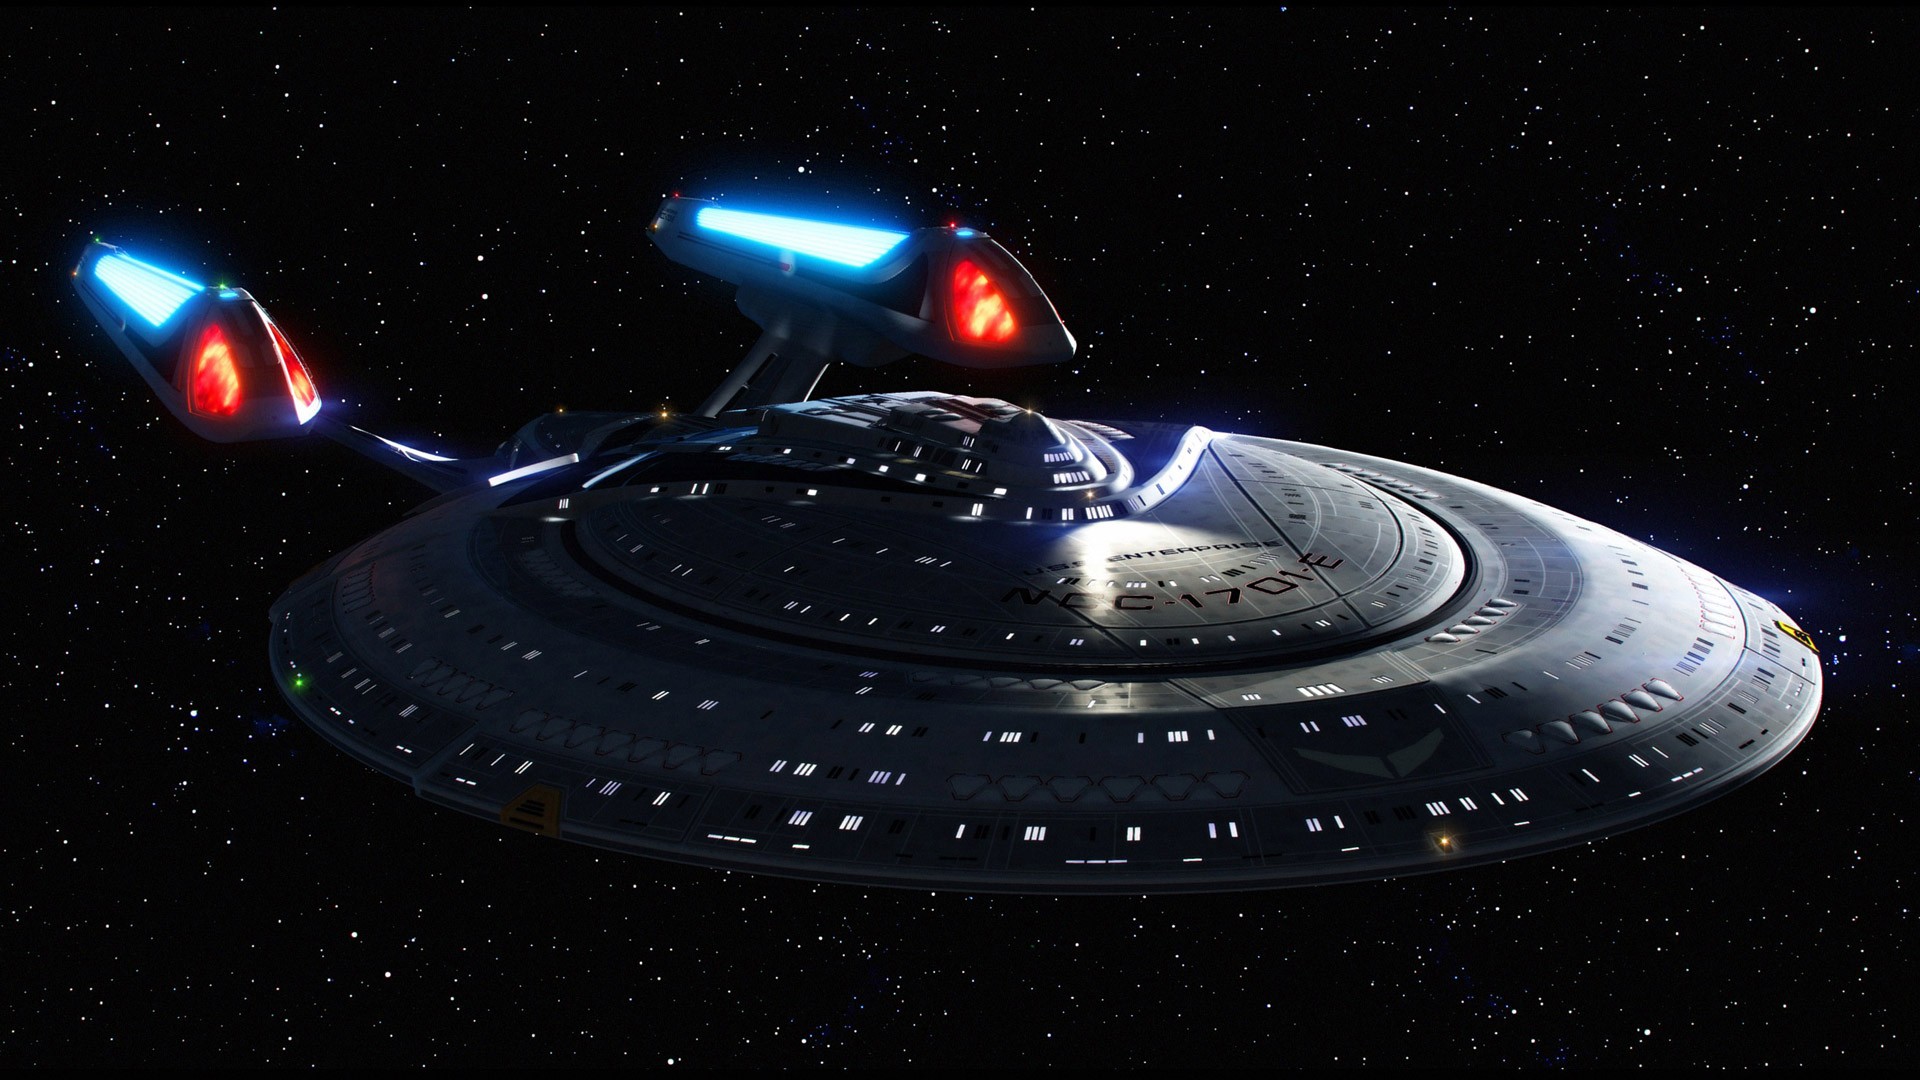 Star Trek USS Enterprise Spaceship Star Trek Ships NCC 1701 Enterprise E Spaceship 1920x1080